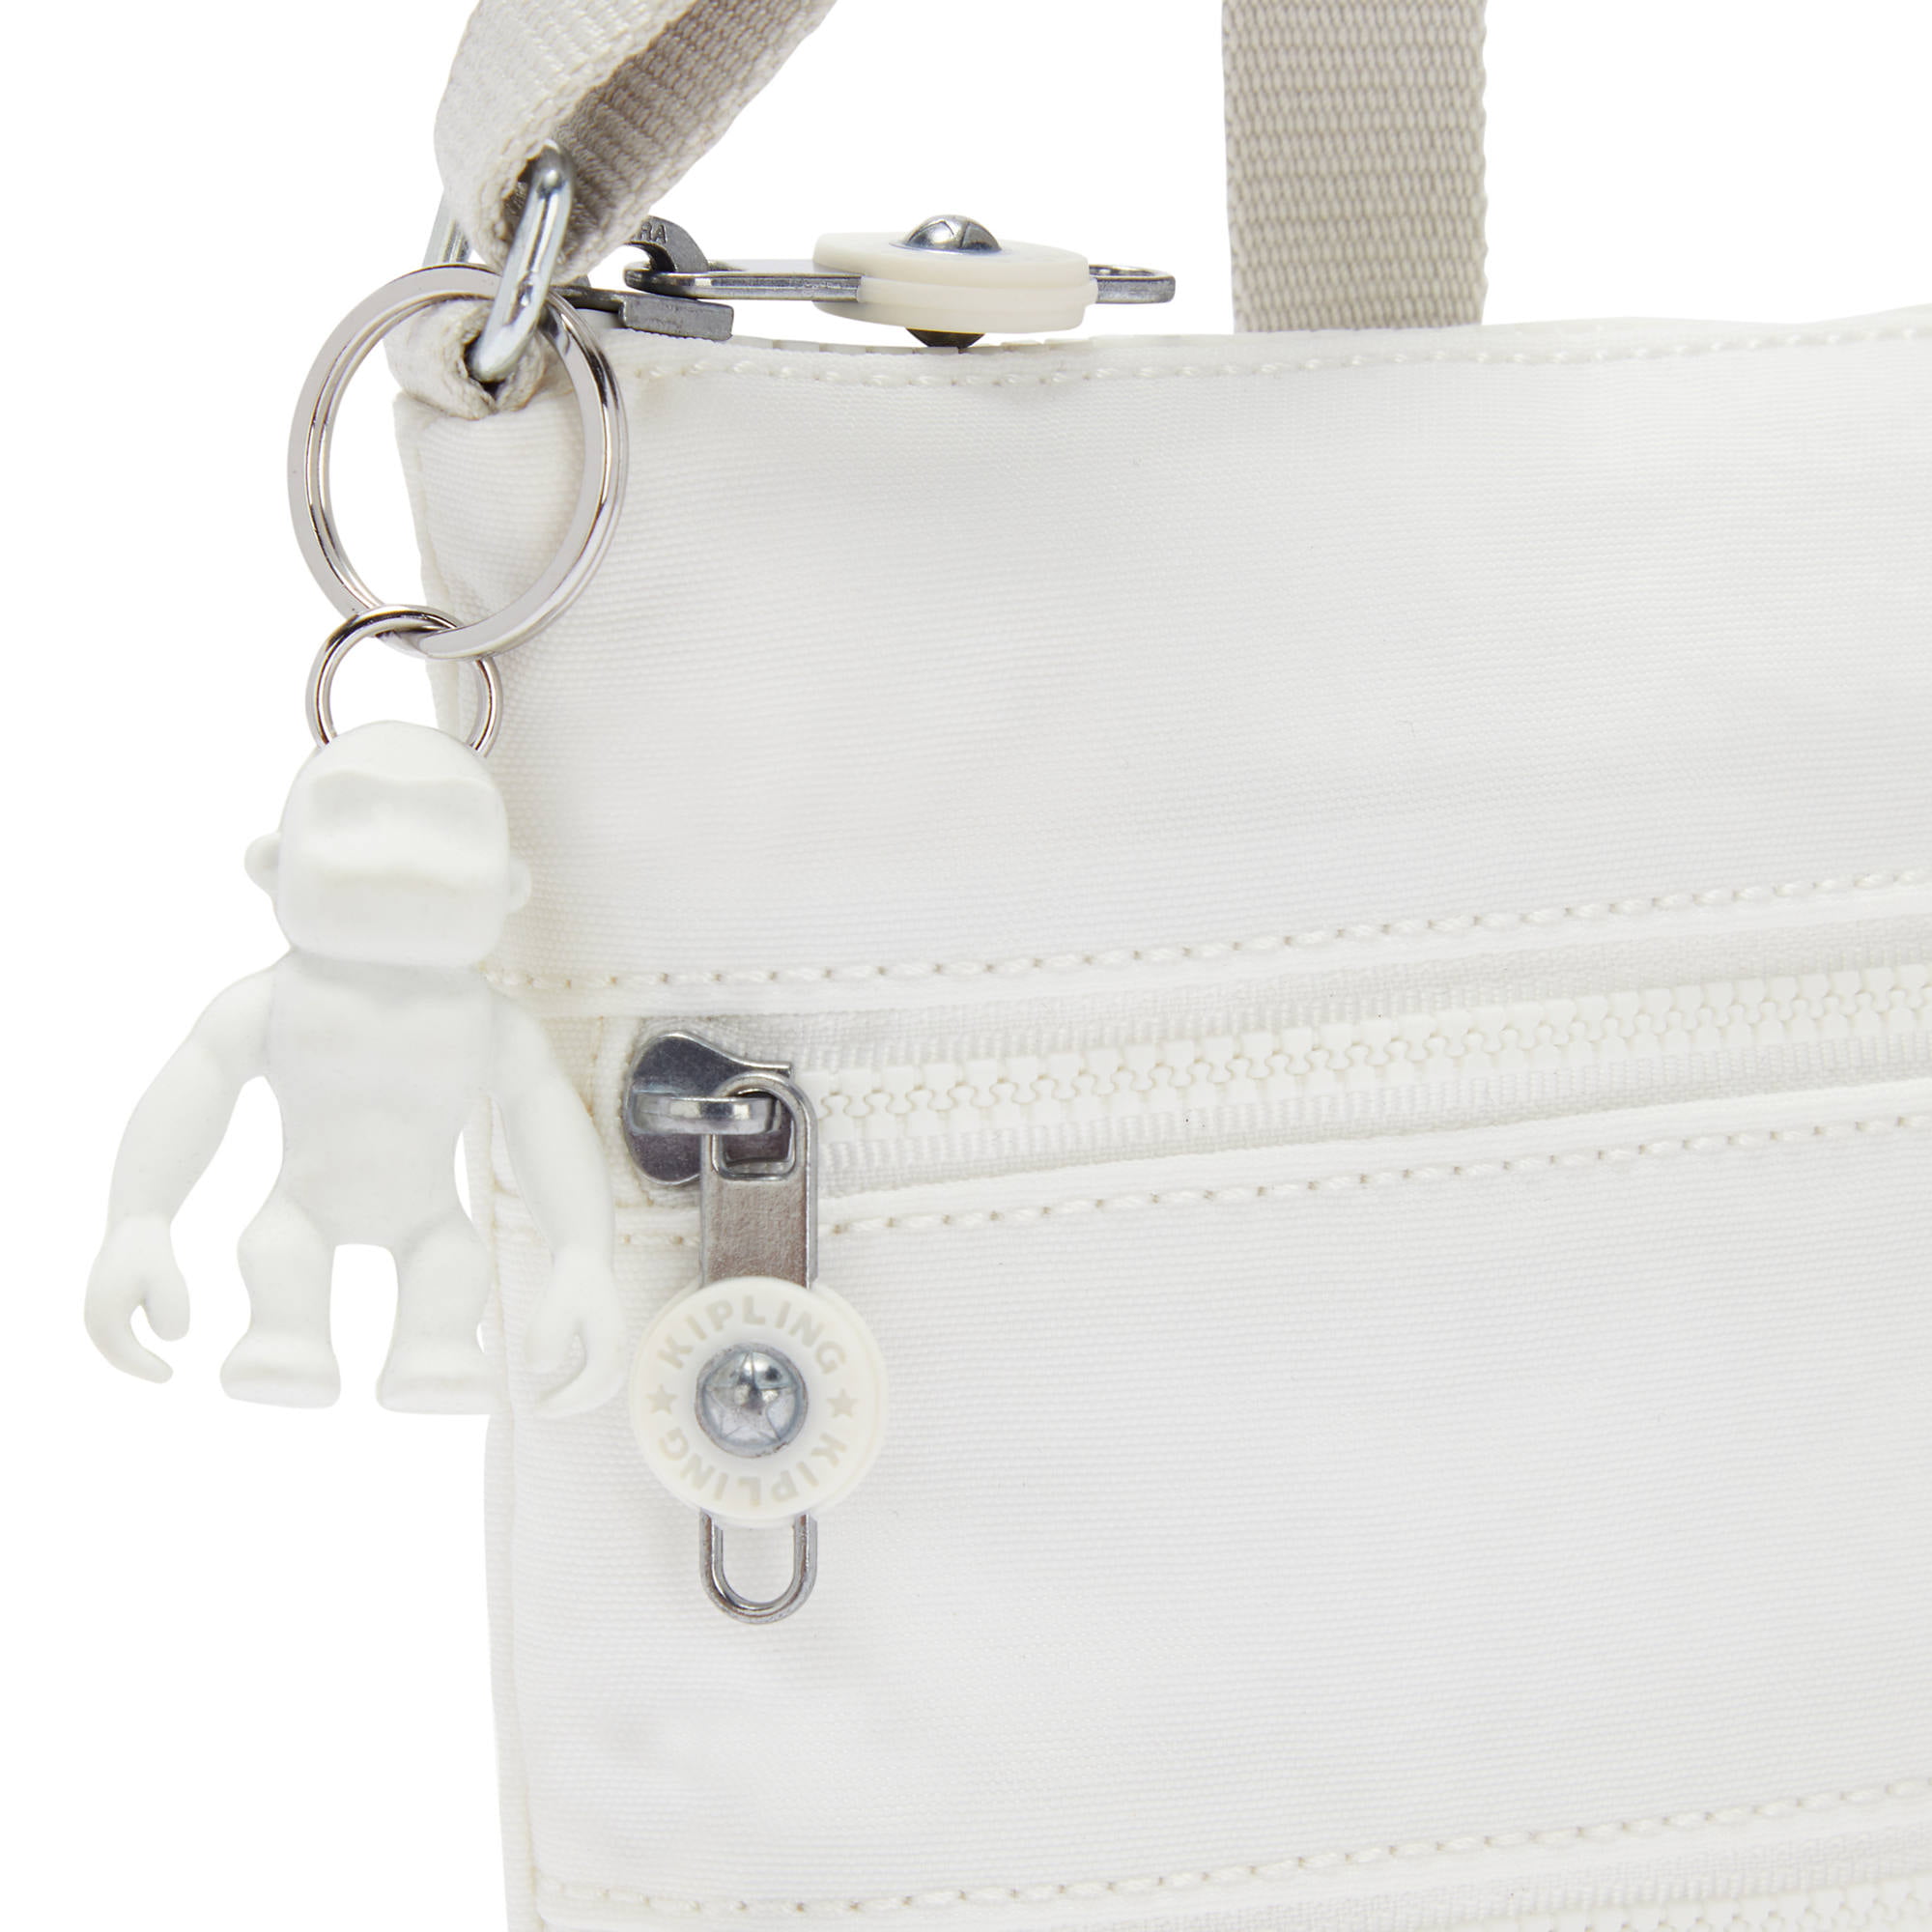 Kipling Women's Keiko Crossbody Mini Bag with Adjustable Strap 